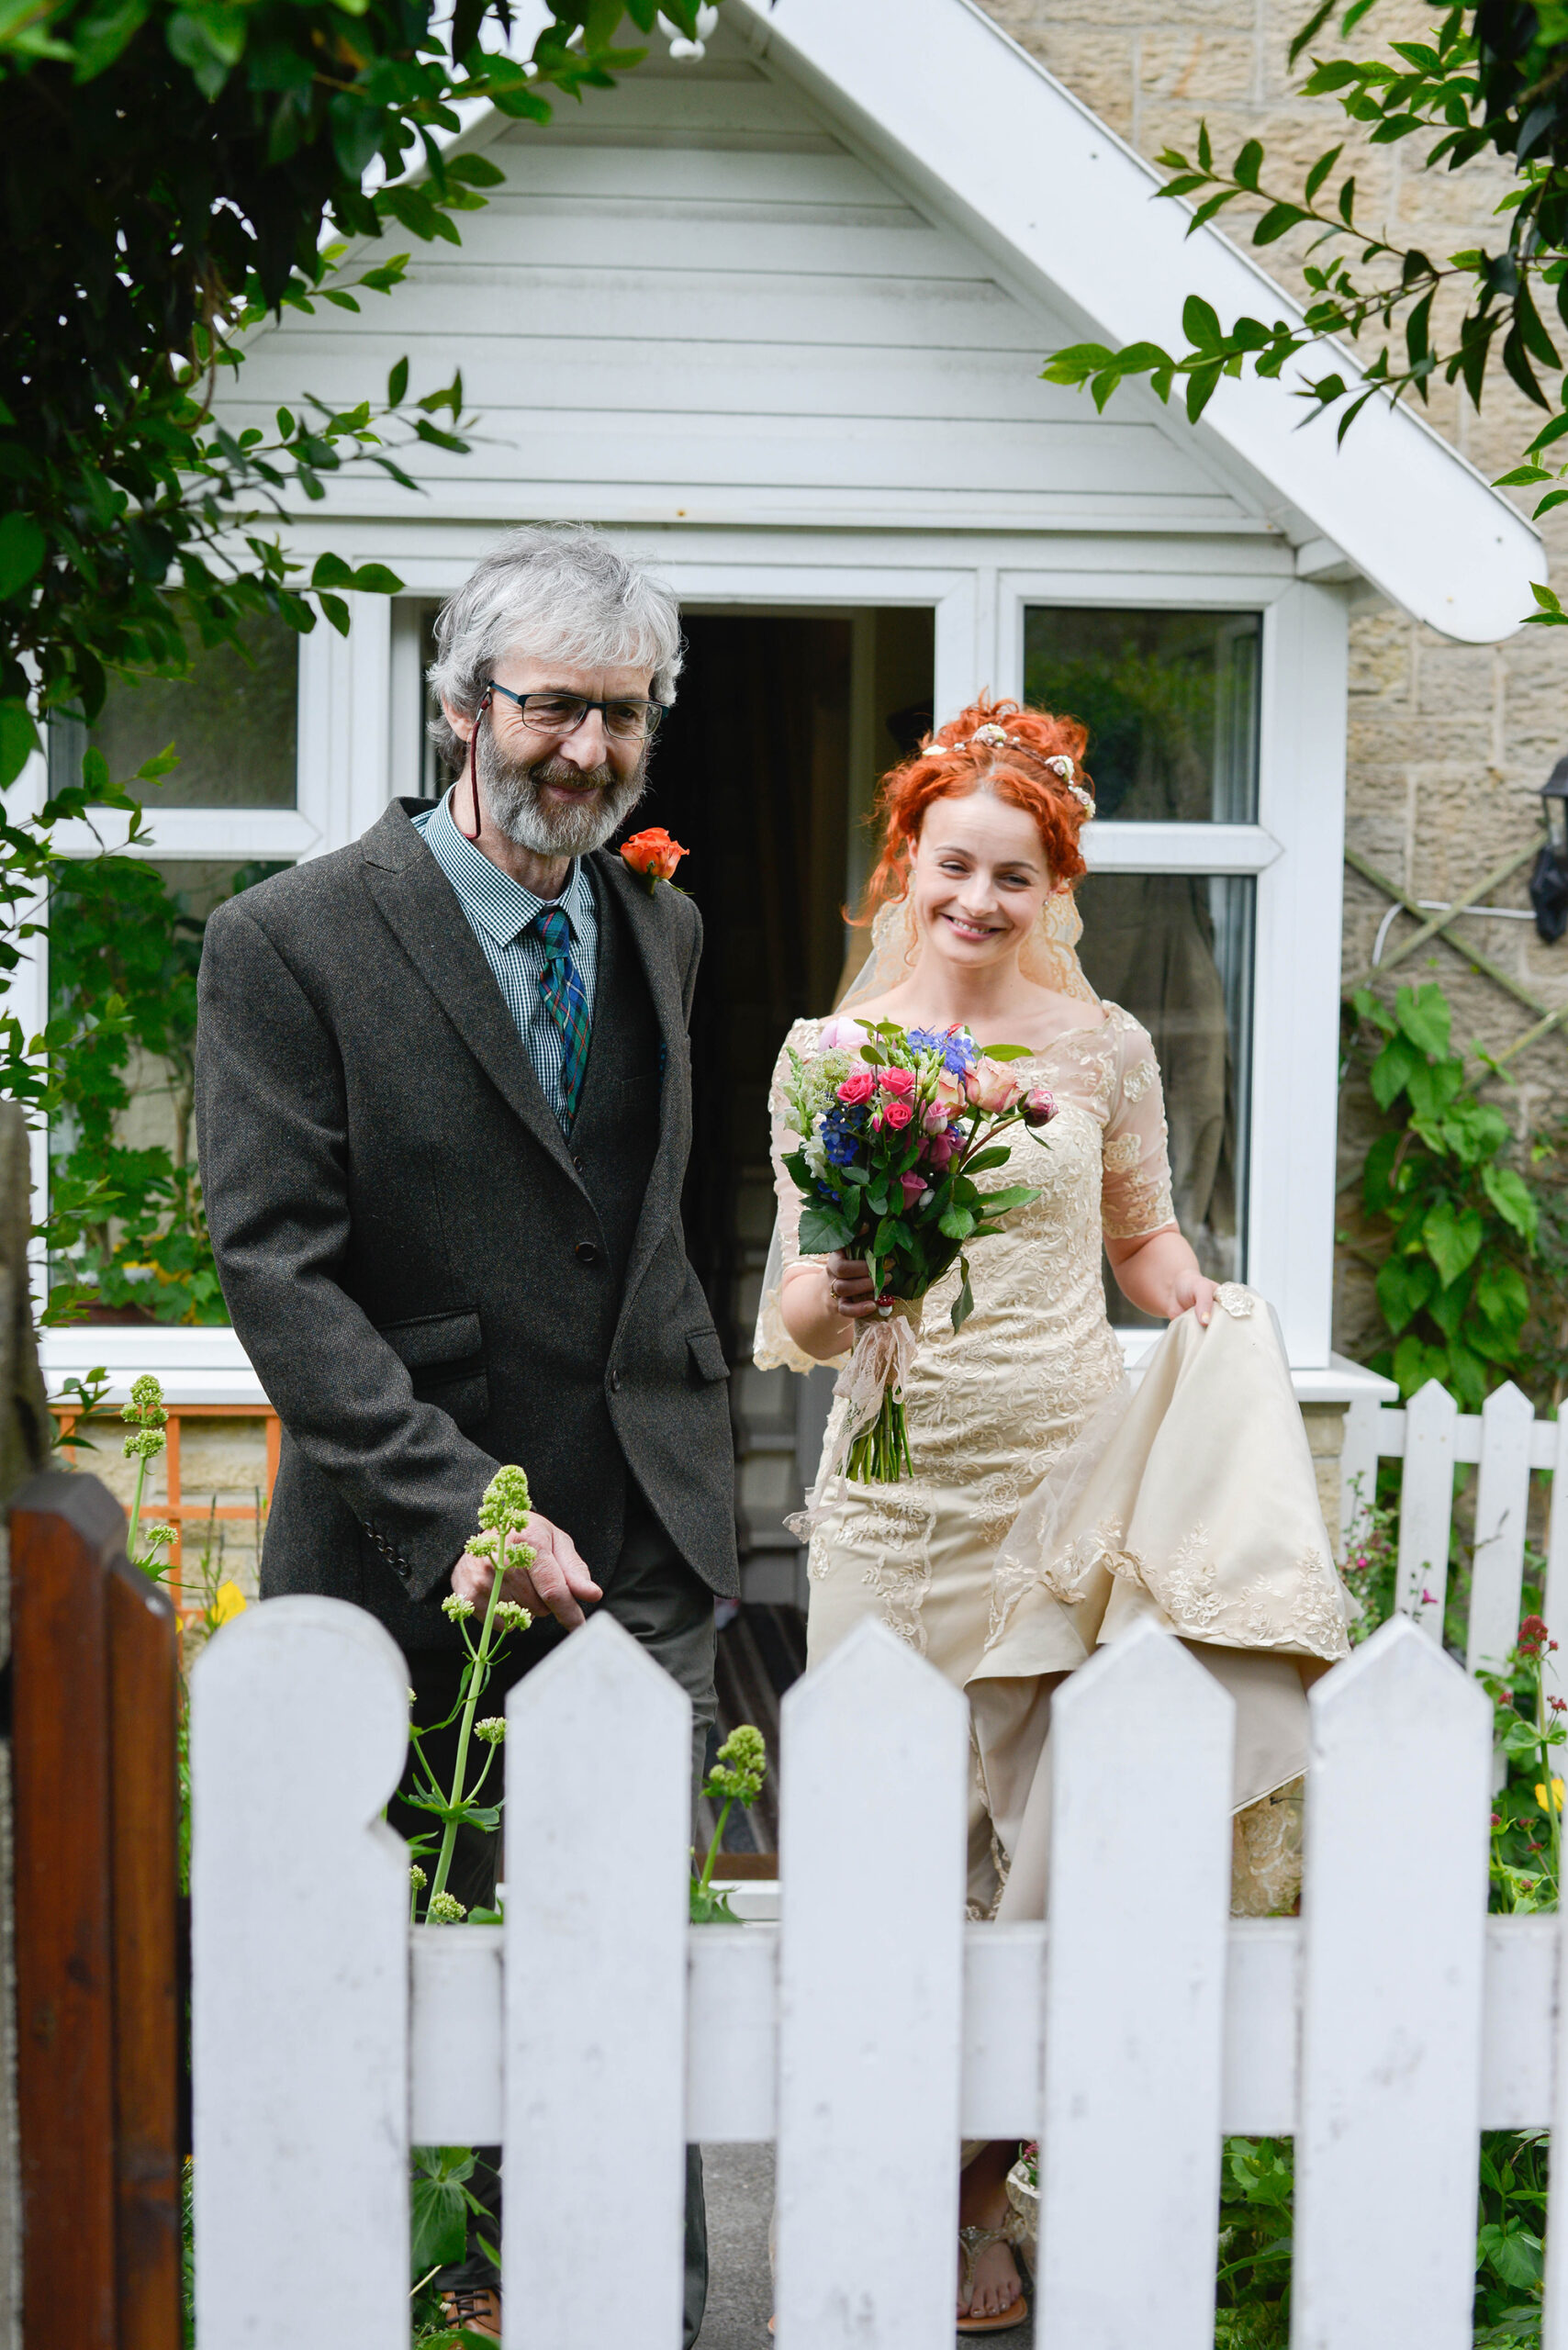 Heather_Darrell_Homemade-Rustic-Wedding_Kimberley-Waterson-Fine-Art-Photography_009